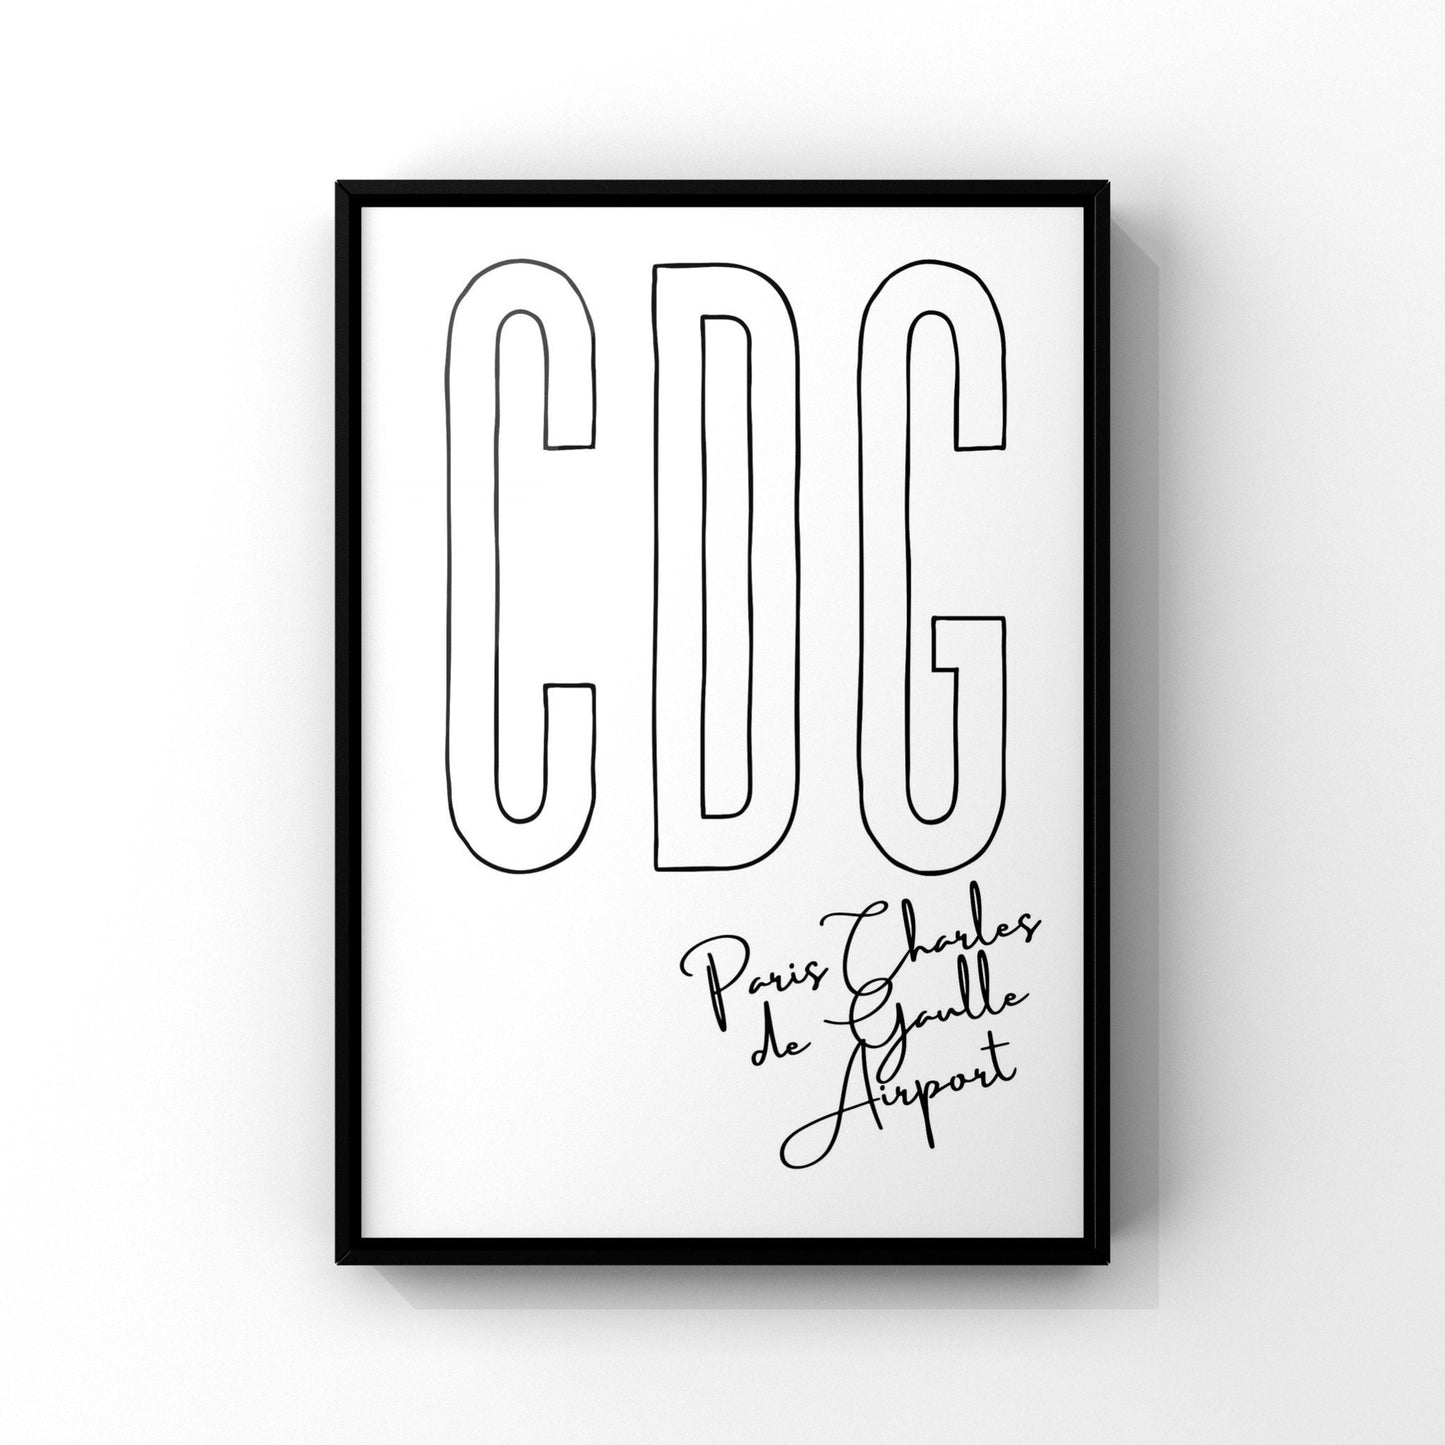 CDG, Paris Charles de Gaulle, Airport Code Prints,